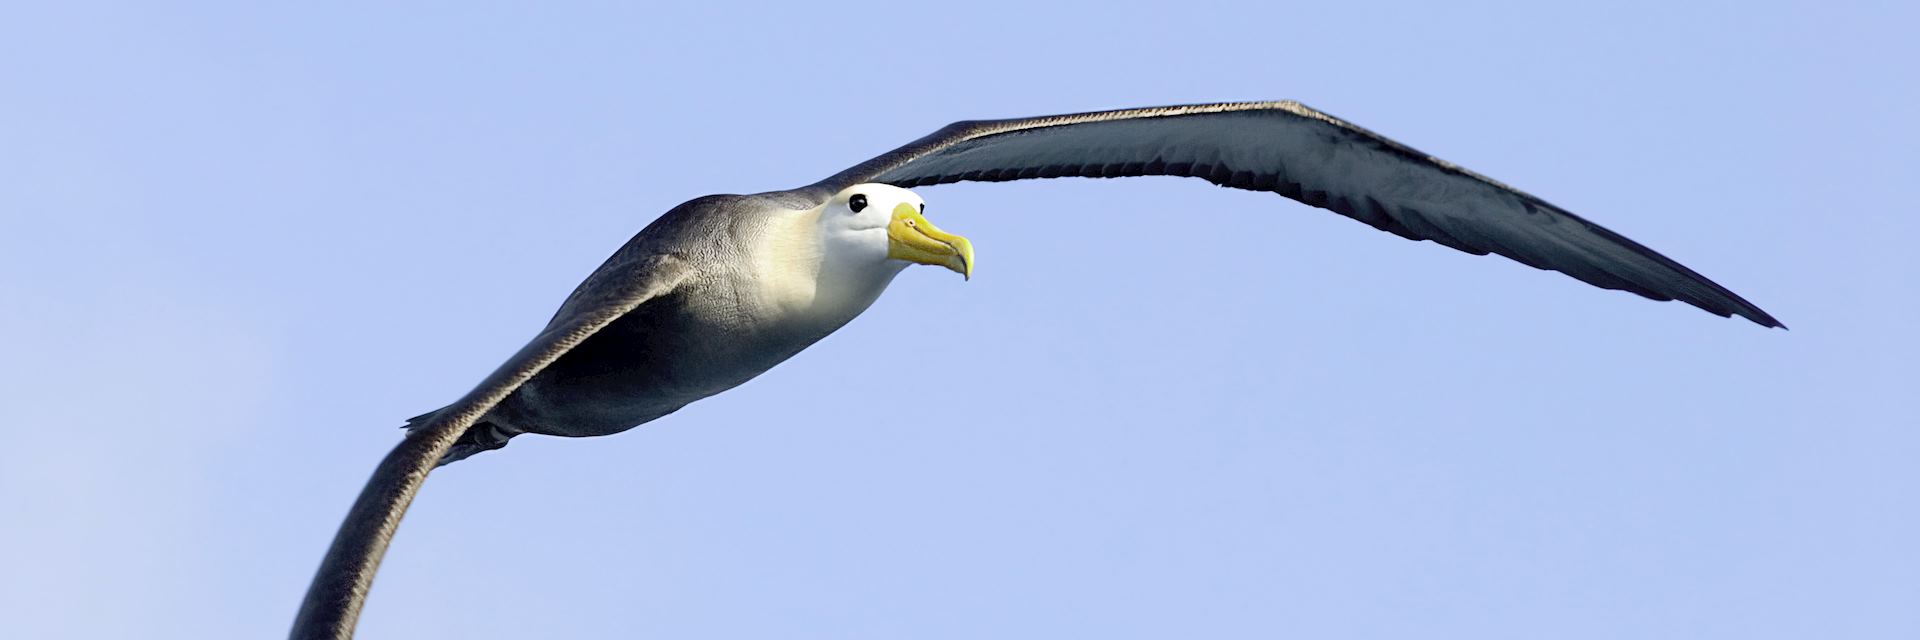 Albatros, the Galapagos islands